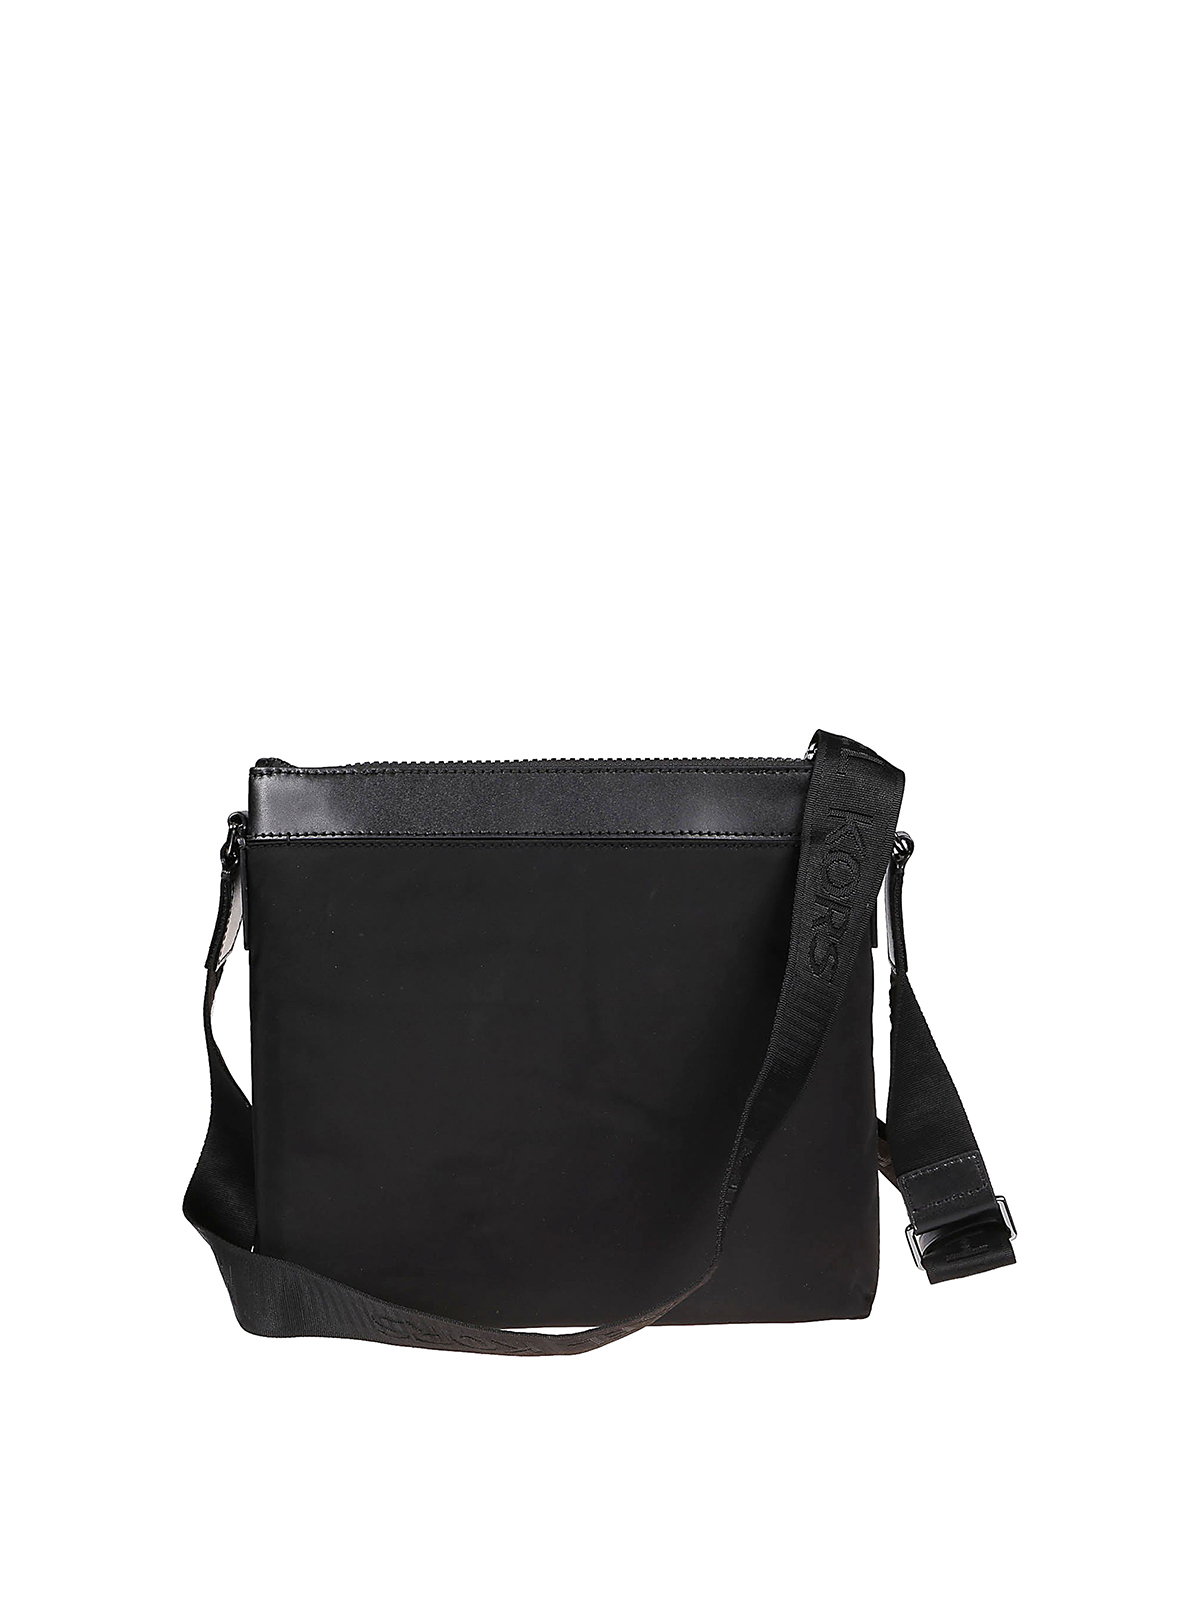 Cross body bags Michael Kors - Brooklyn large black shoulder bag -  33U9MBNM1C001